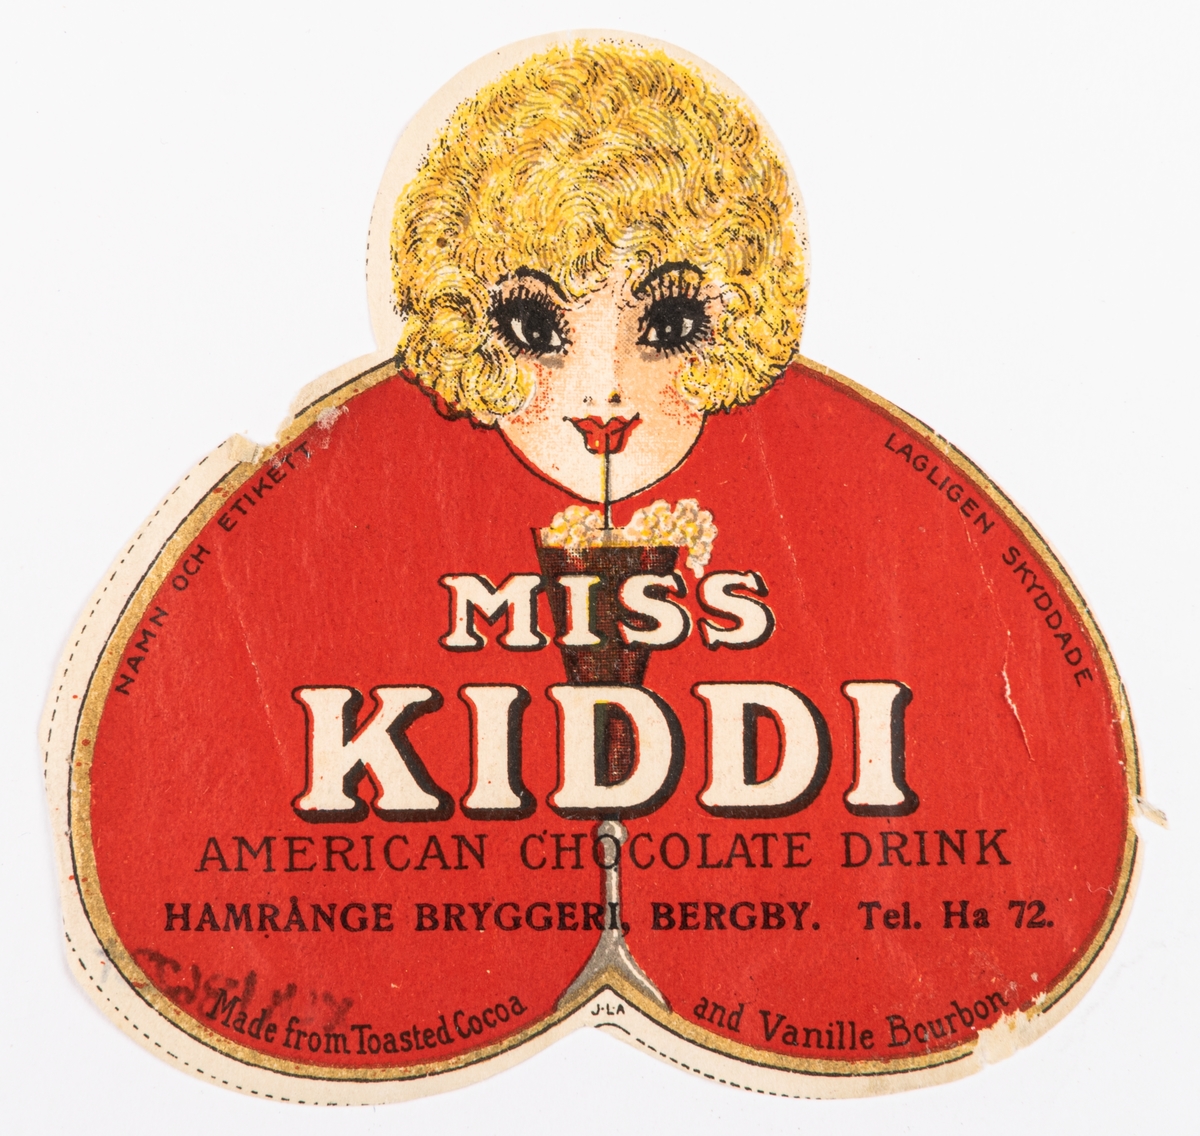 Etikett för flaska. Miss Kiddi - american chocolate drink.
Hamrånge bryggeri, Bergby.